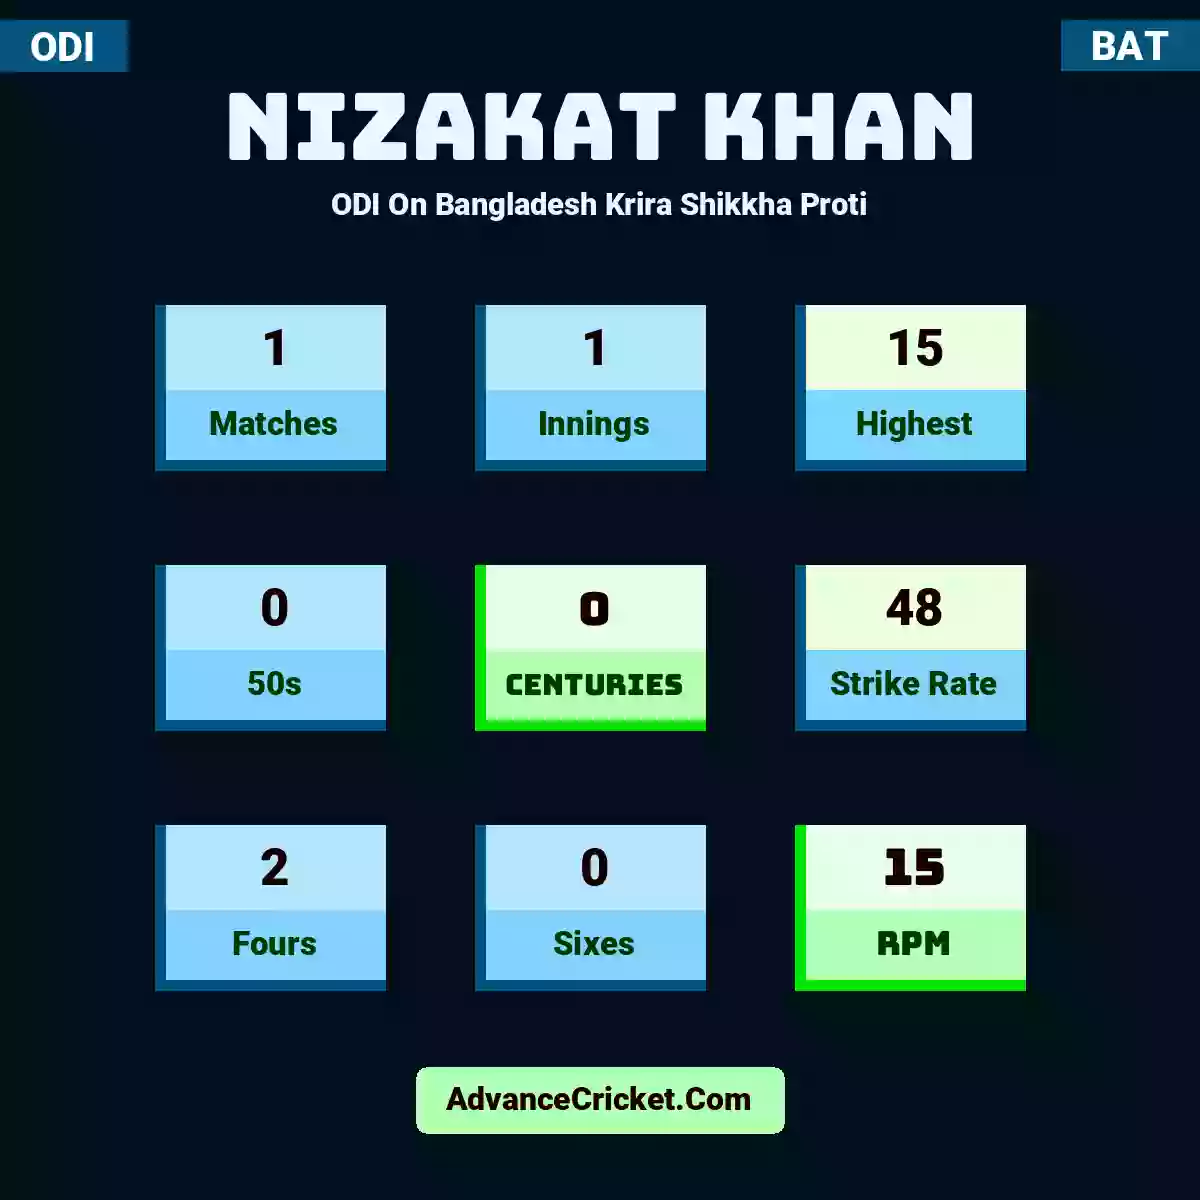 Nizakat Khan ODI  On Bangladesh Krira Shikkha Proti, Nizakat Khan played 1 matches, scored 15 runs as highest, 0 half-centuries, and 0 centuries, with a strike rate of 48. N.Khan hit 2 fours and 0 sixes, with an RPM of 15.